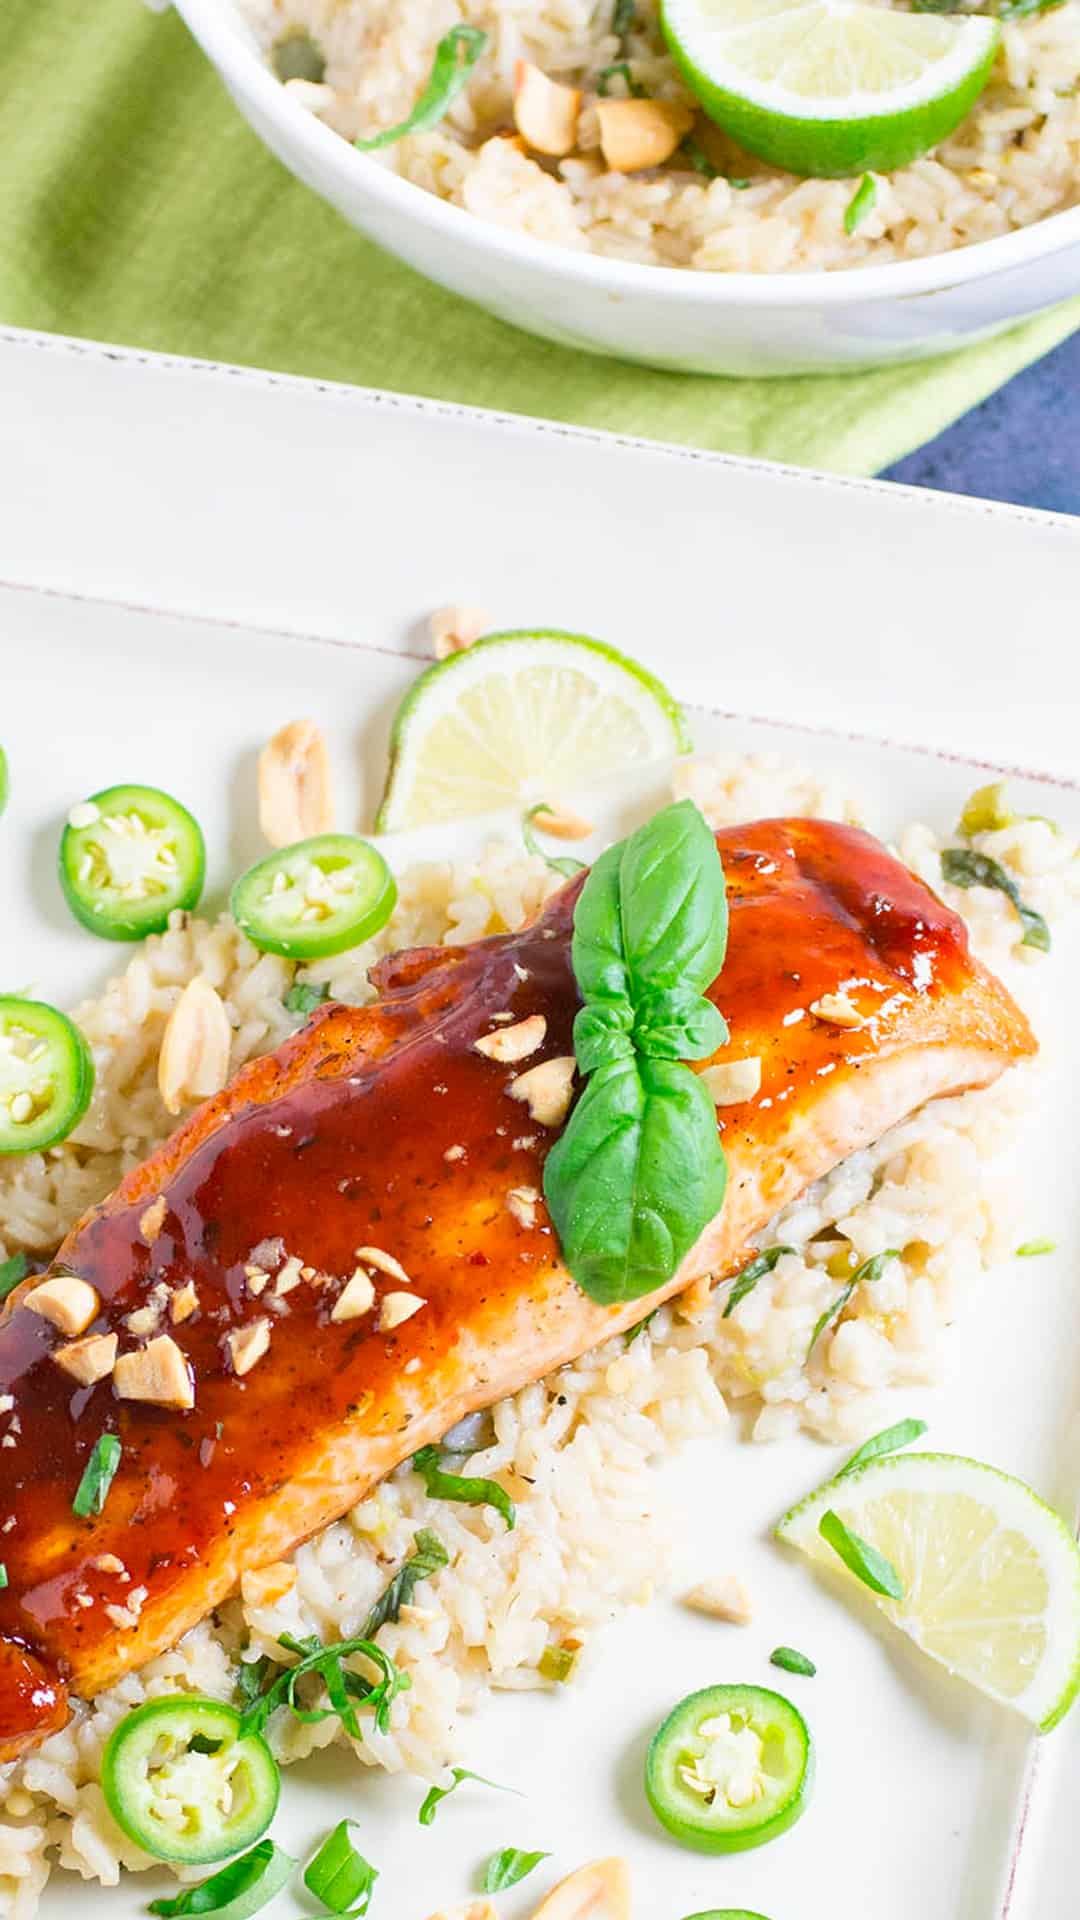 Homemade Szechuan Salmon With Chili-Basil Rice